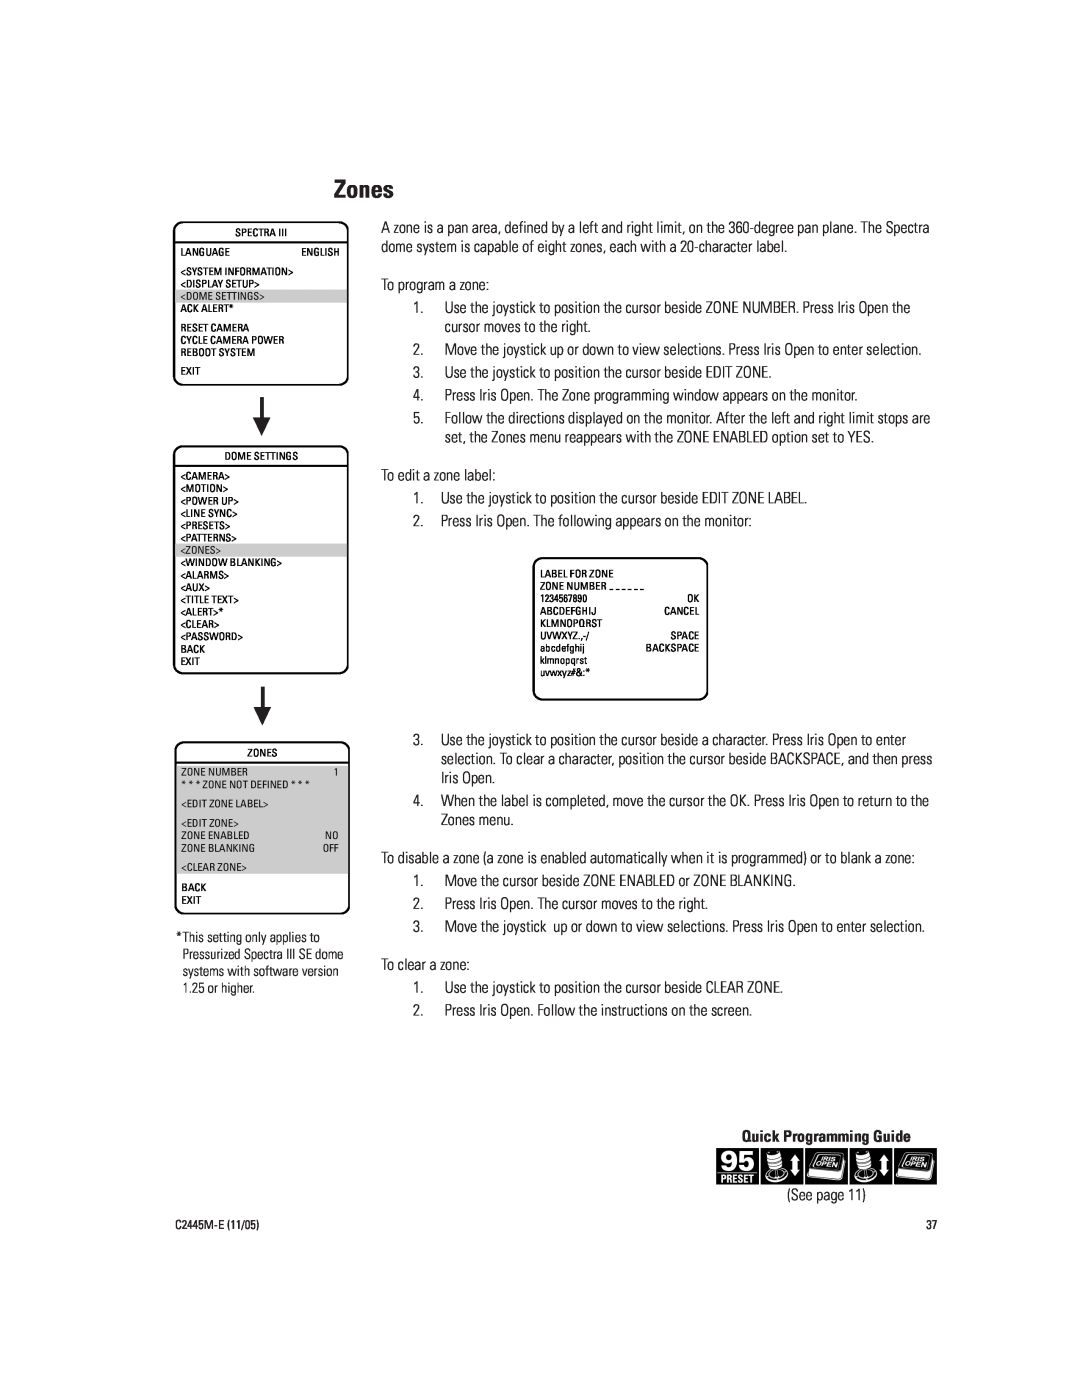 Pelco DD53CBW-X manual Zones, Quick Programming Guide 